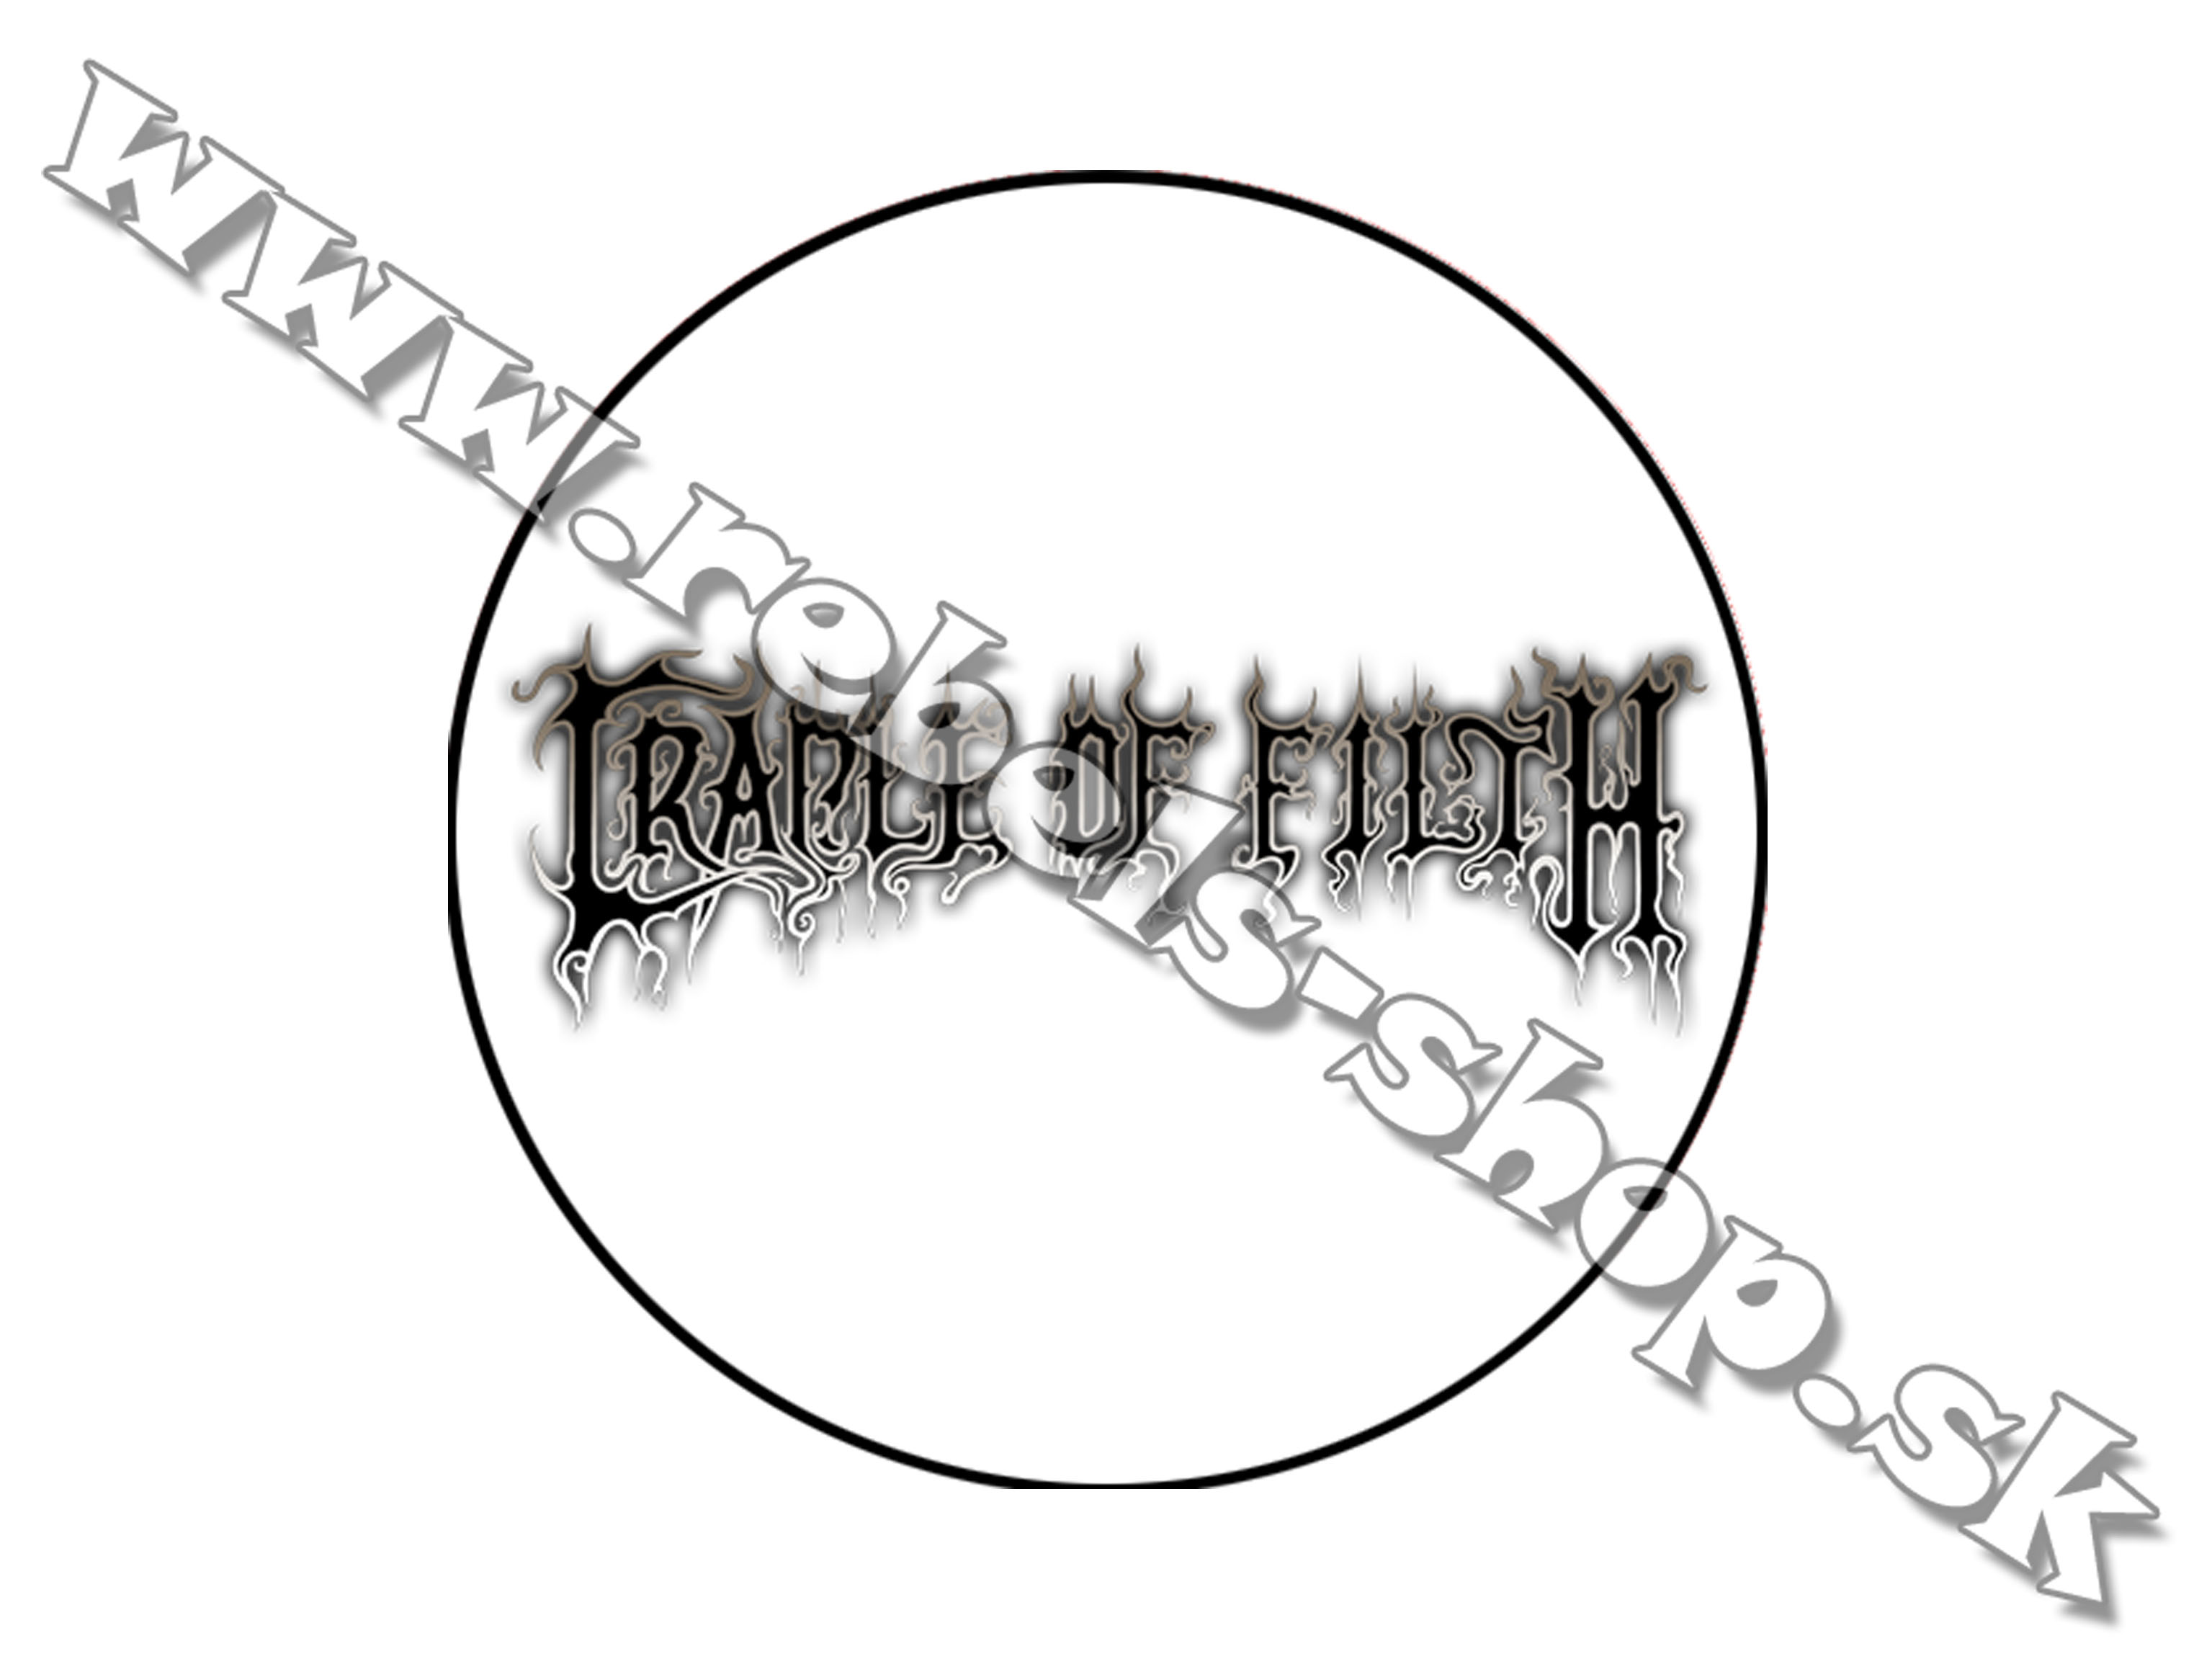 Odznak "Cradle of Filth"